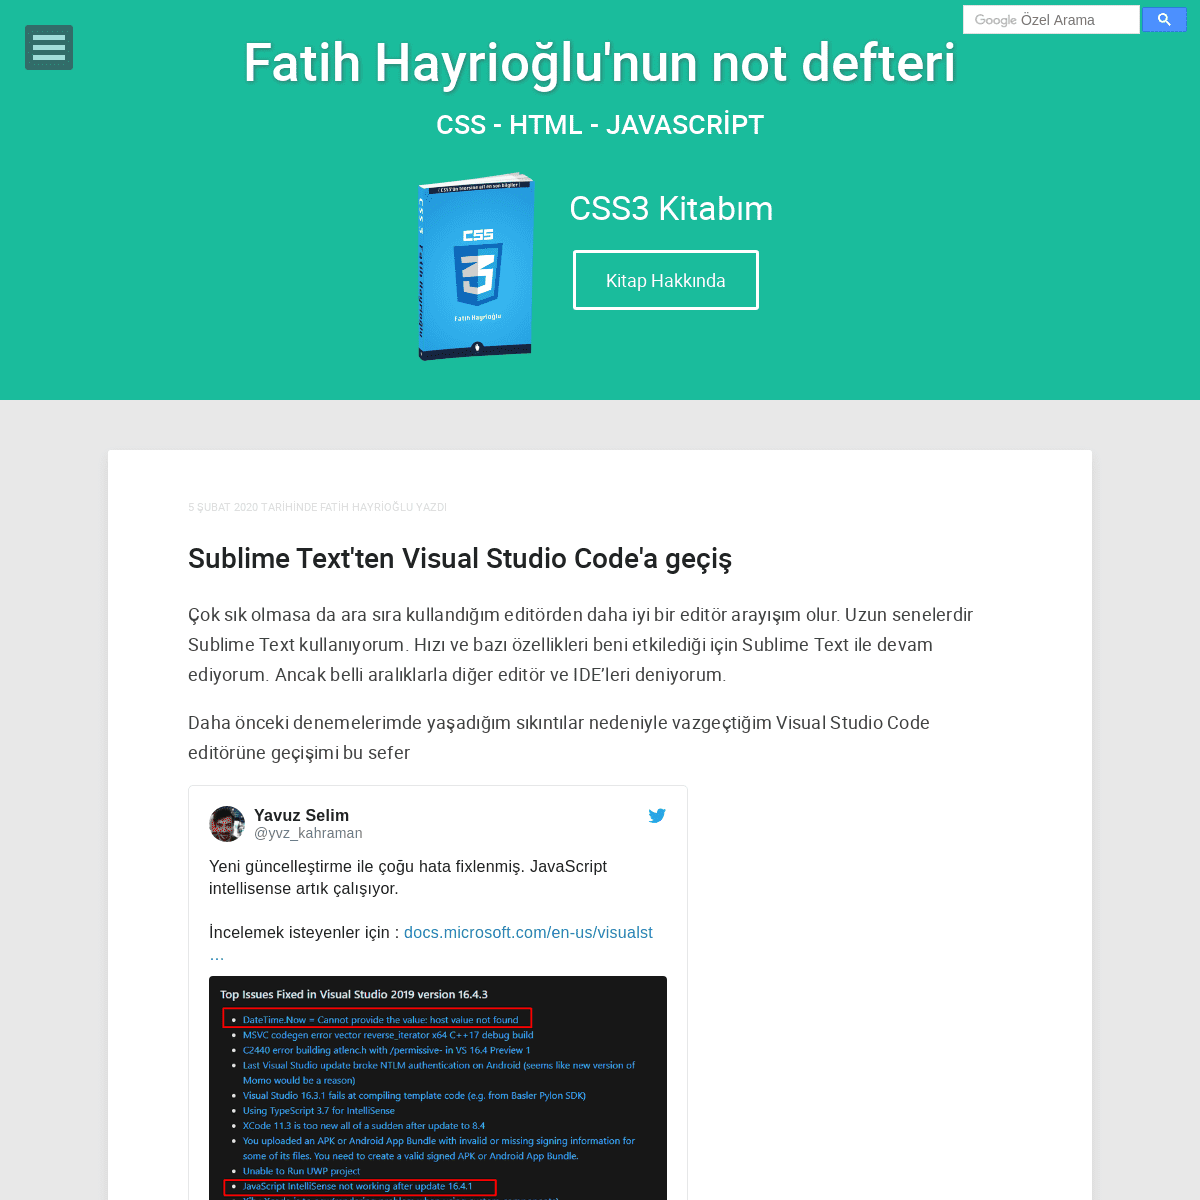 A complete backup of fatihhayrioglu.com